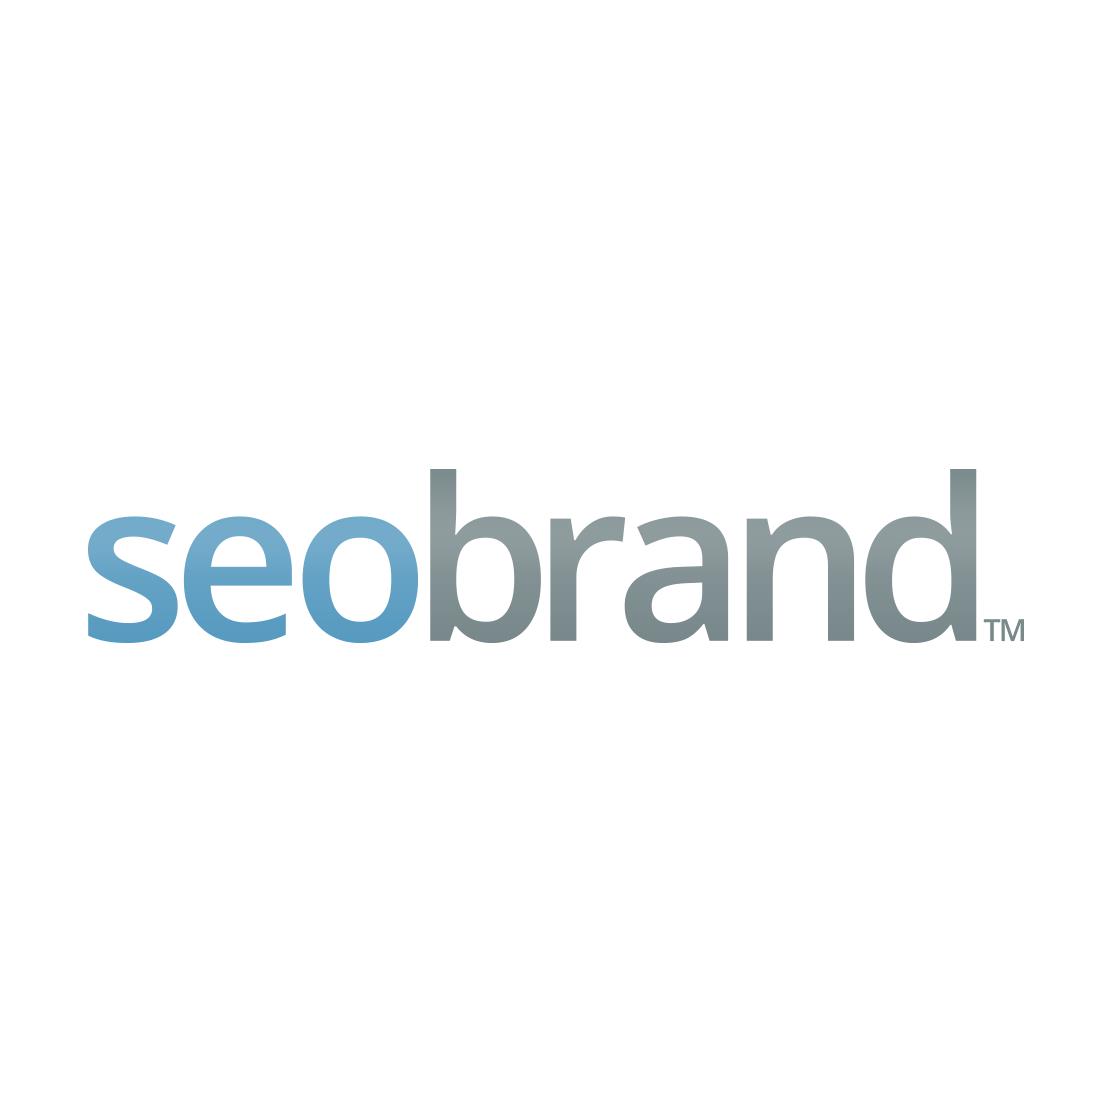 Best Search Engine Optimization Company Logo: SEO Brand